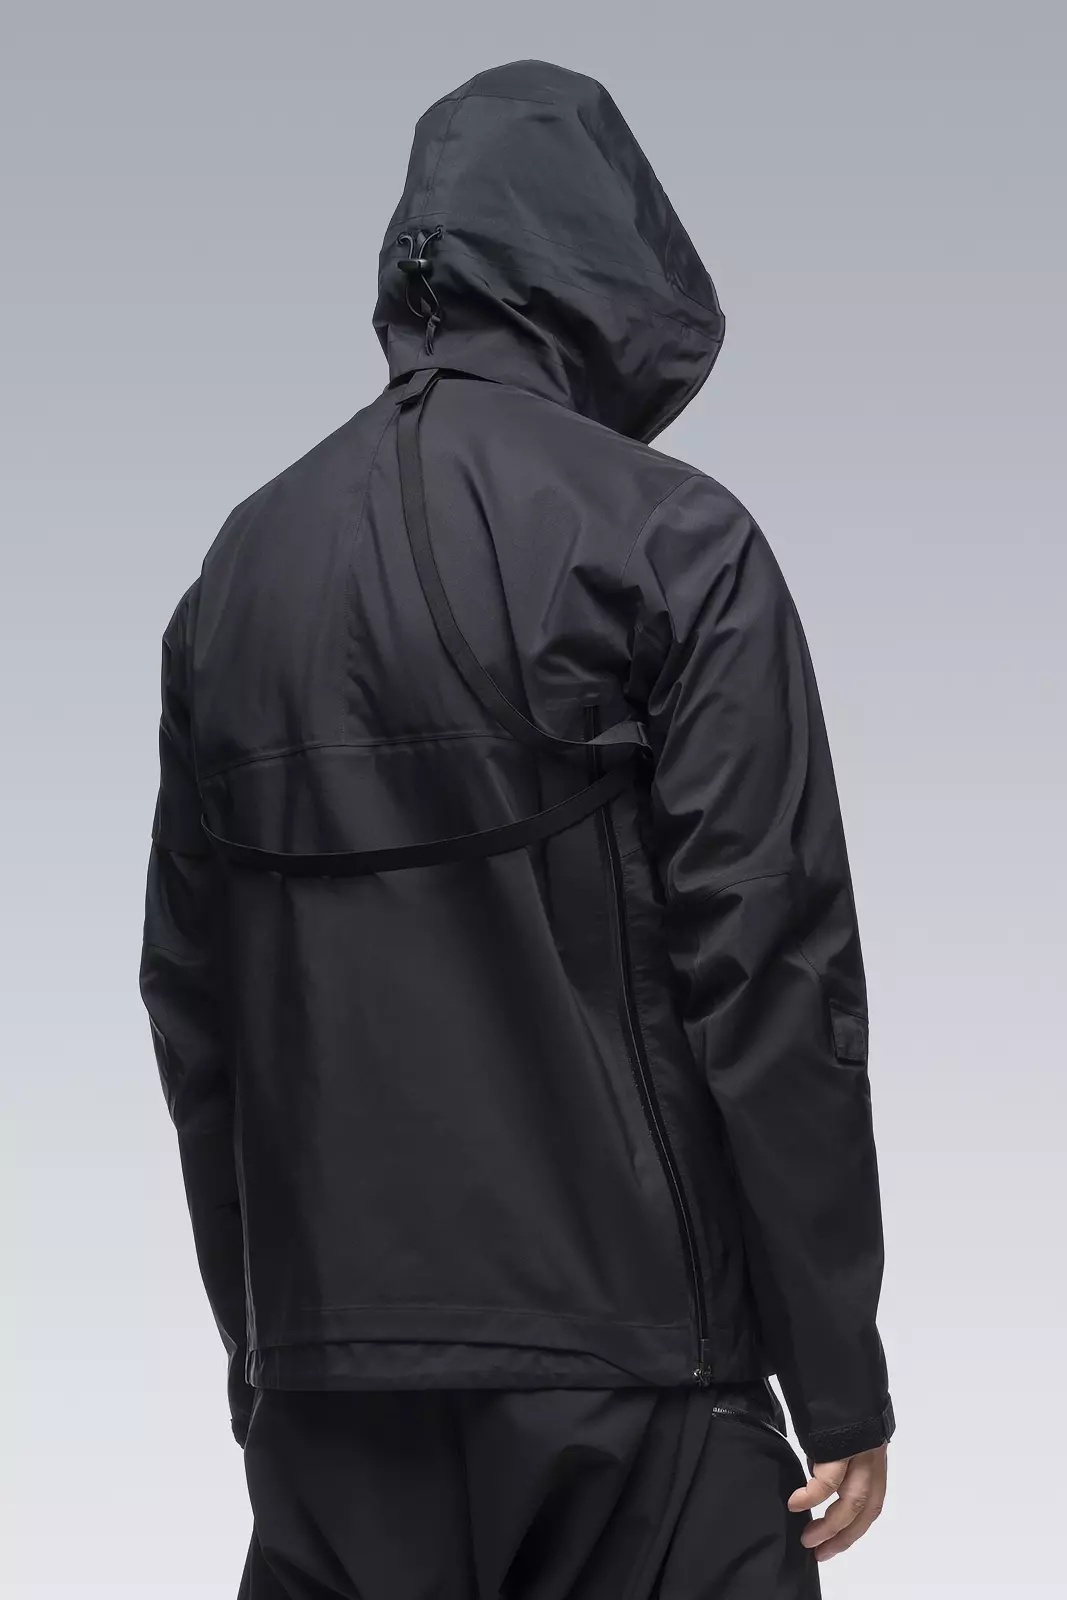 J1A-GTKR-BKS KR EX 3L Gore-Tex® Pro Interops Jacket Black with size 5 WR zippers in gloss black - 3